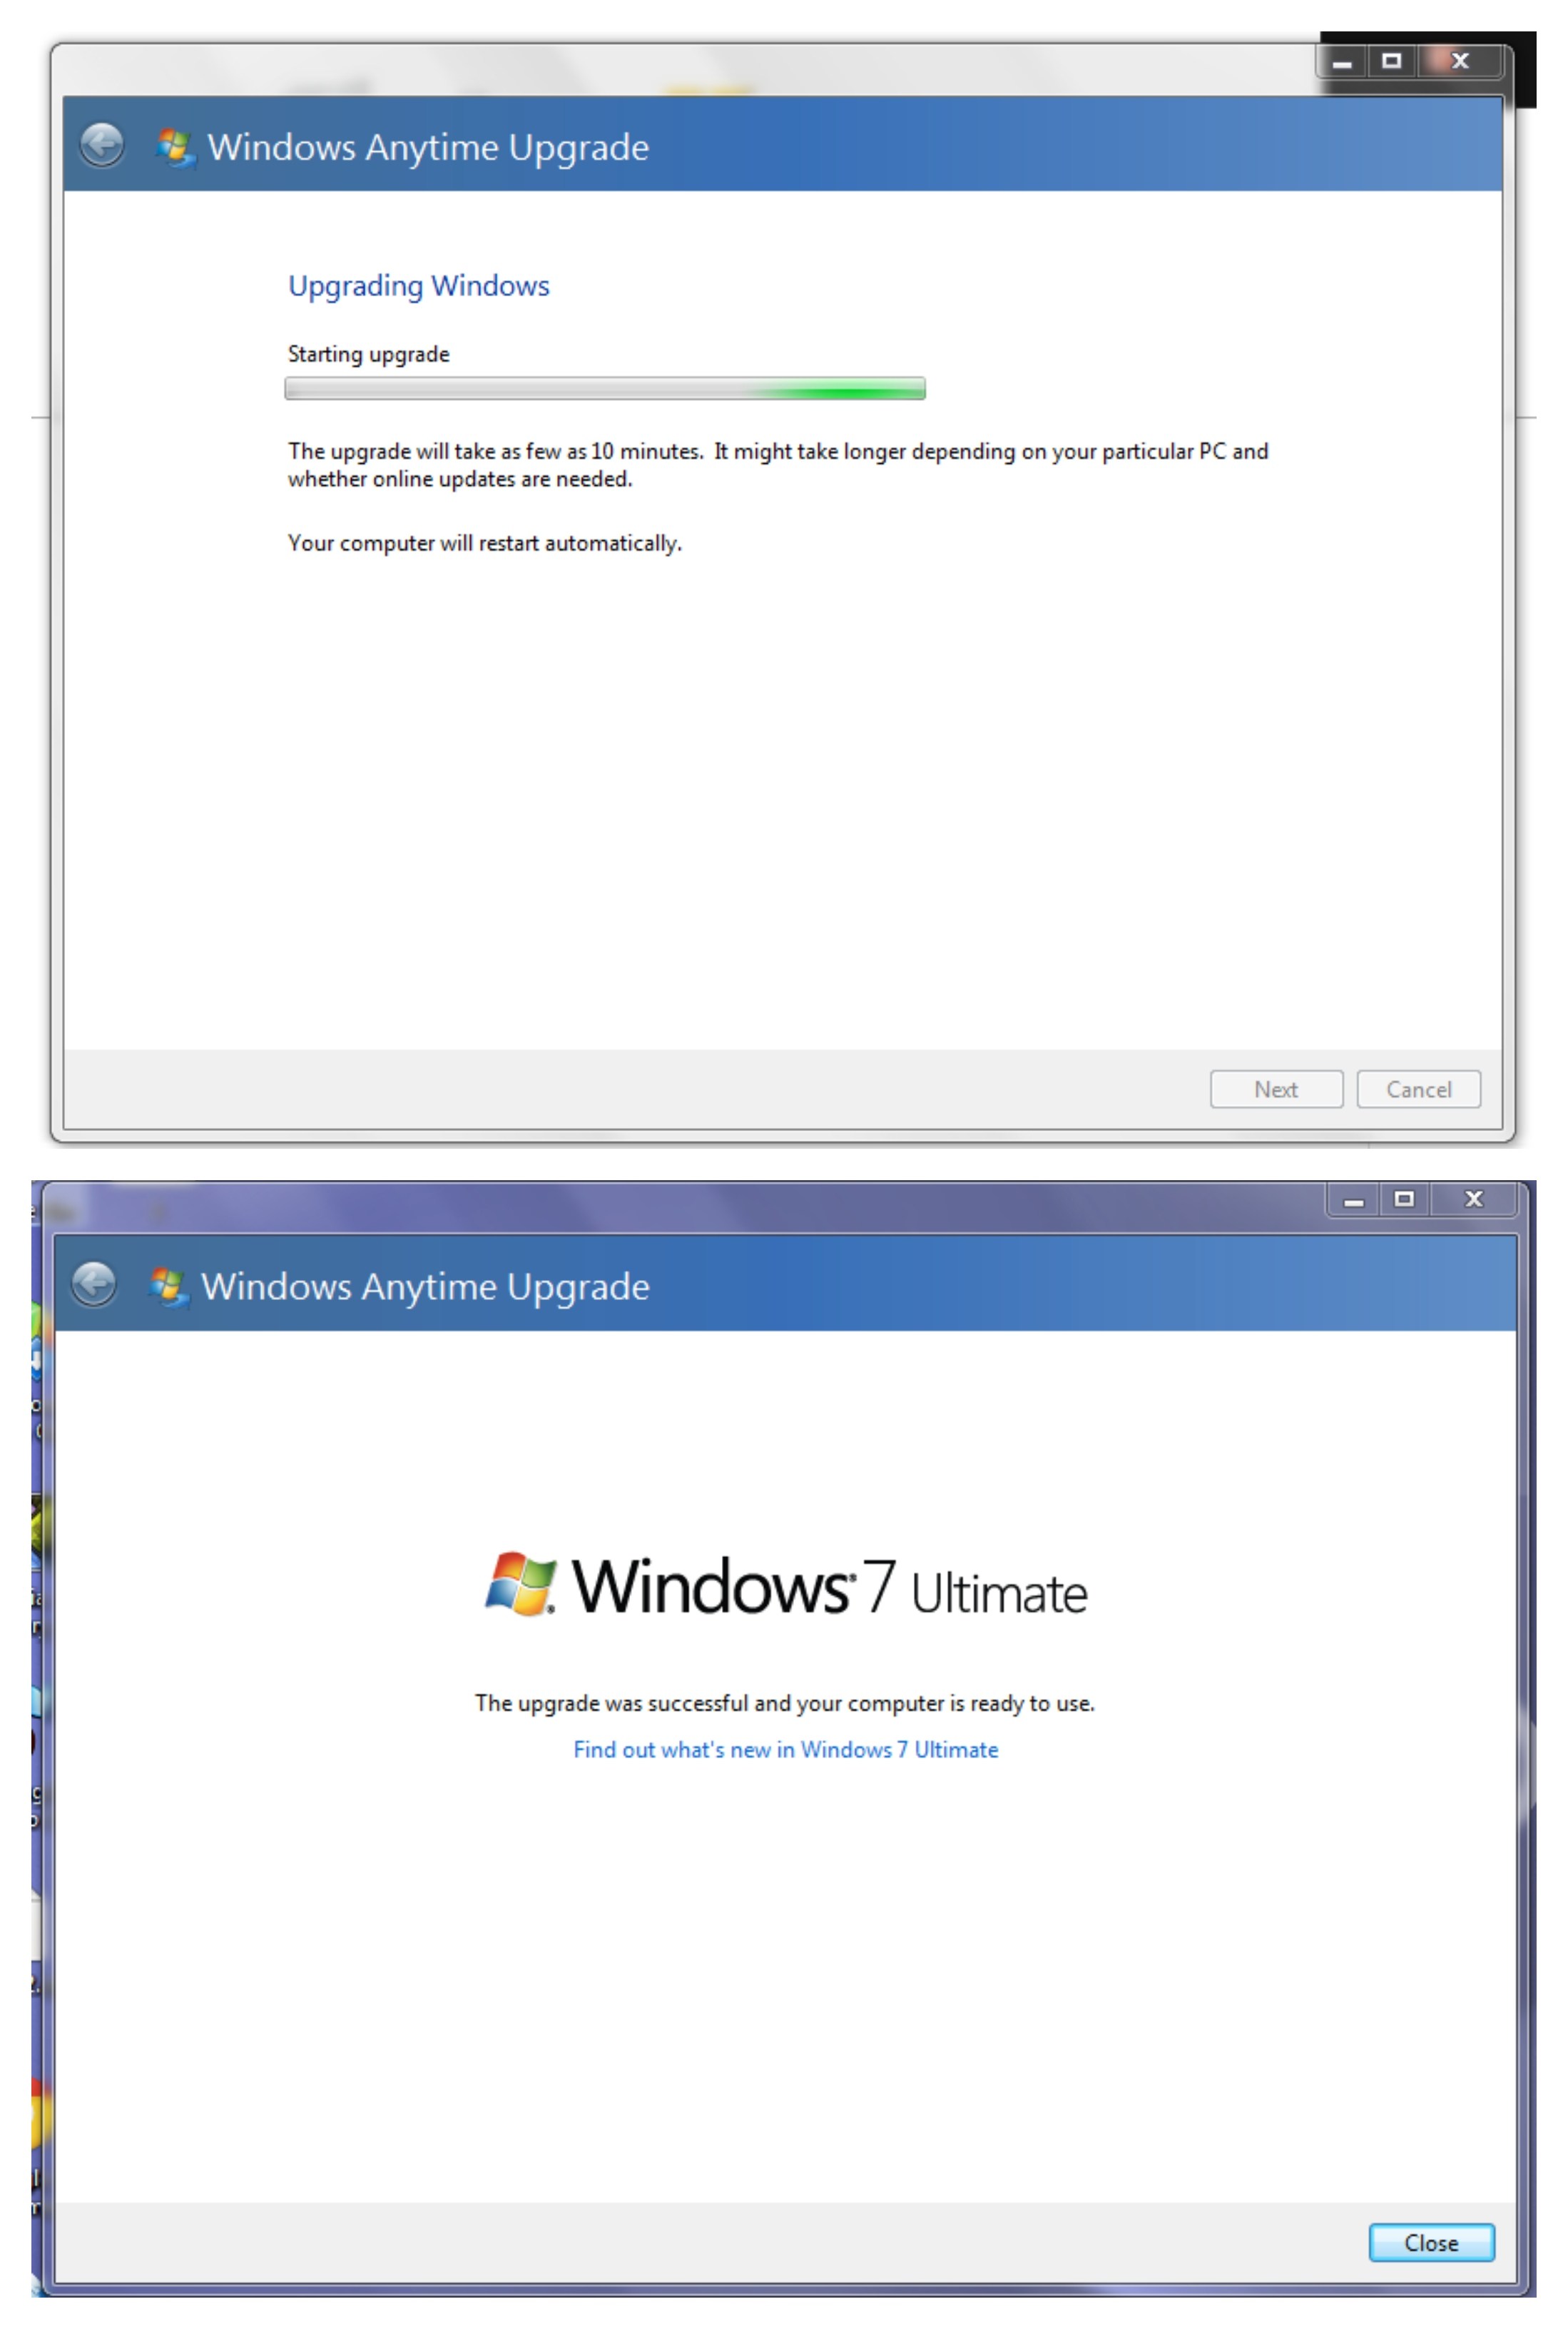 Windows Anytime Upgrade Key Generator Windows 10